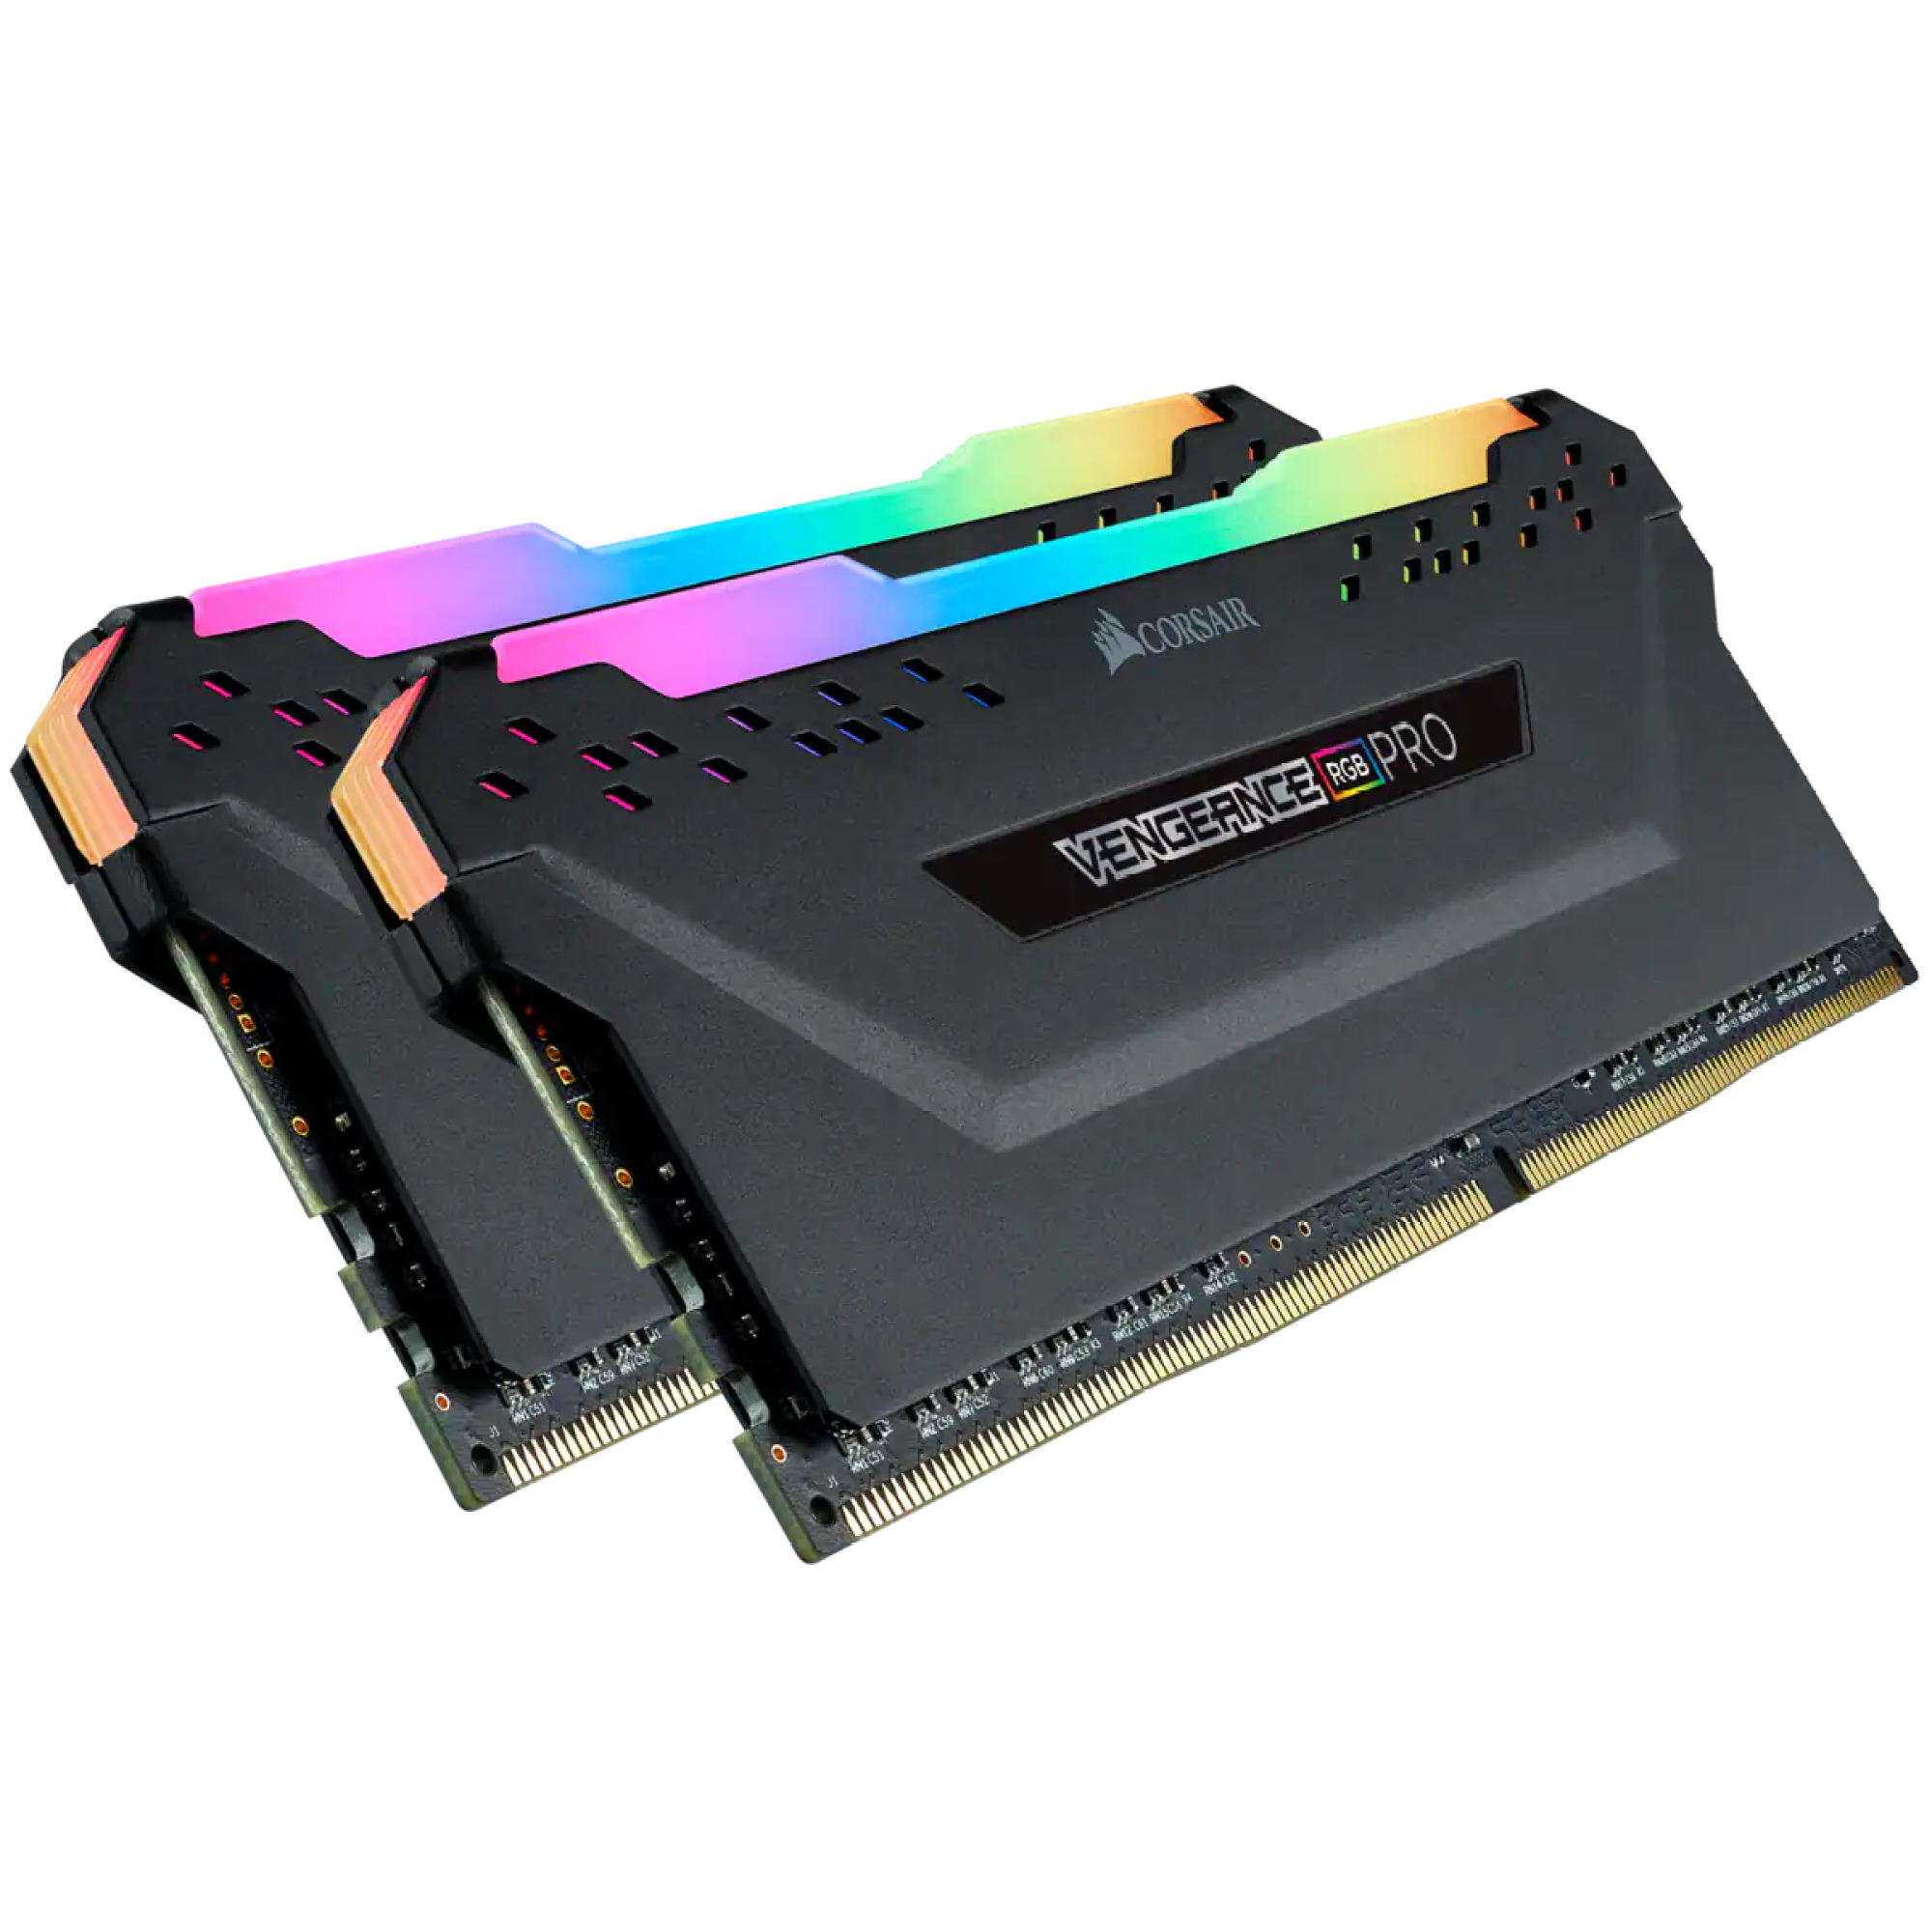 The Corsair Vengeance Pro RGB RAM.